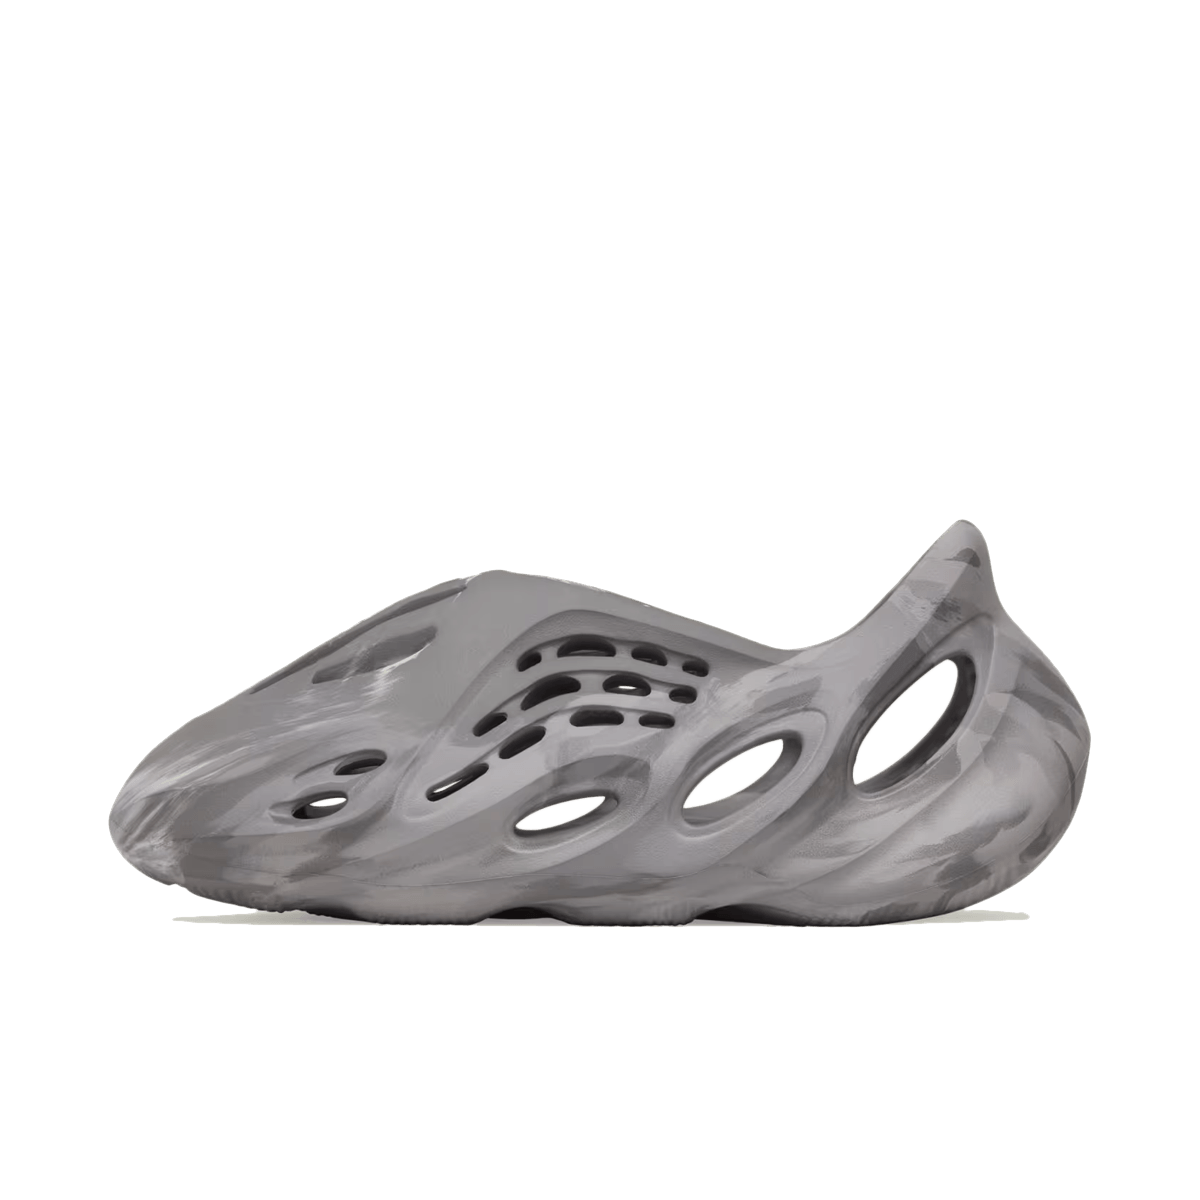 adidas Yeezy Foam Runner 'MX Granite' IE4931